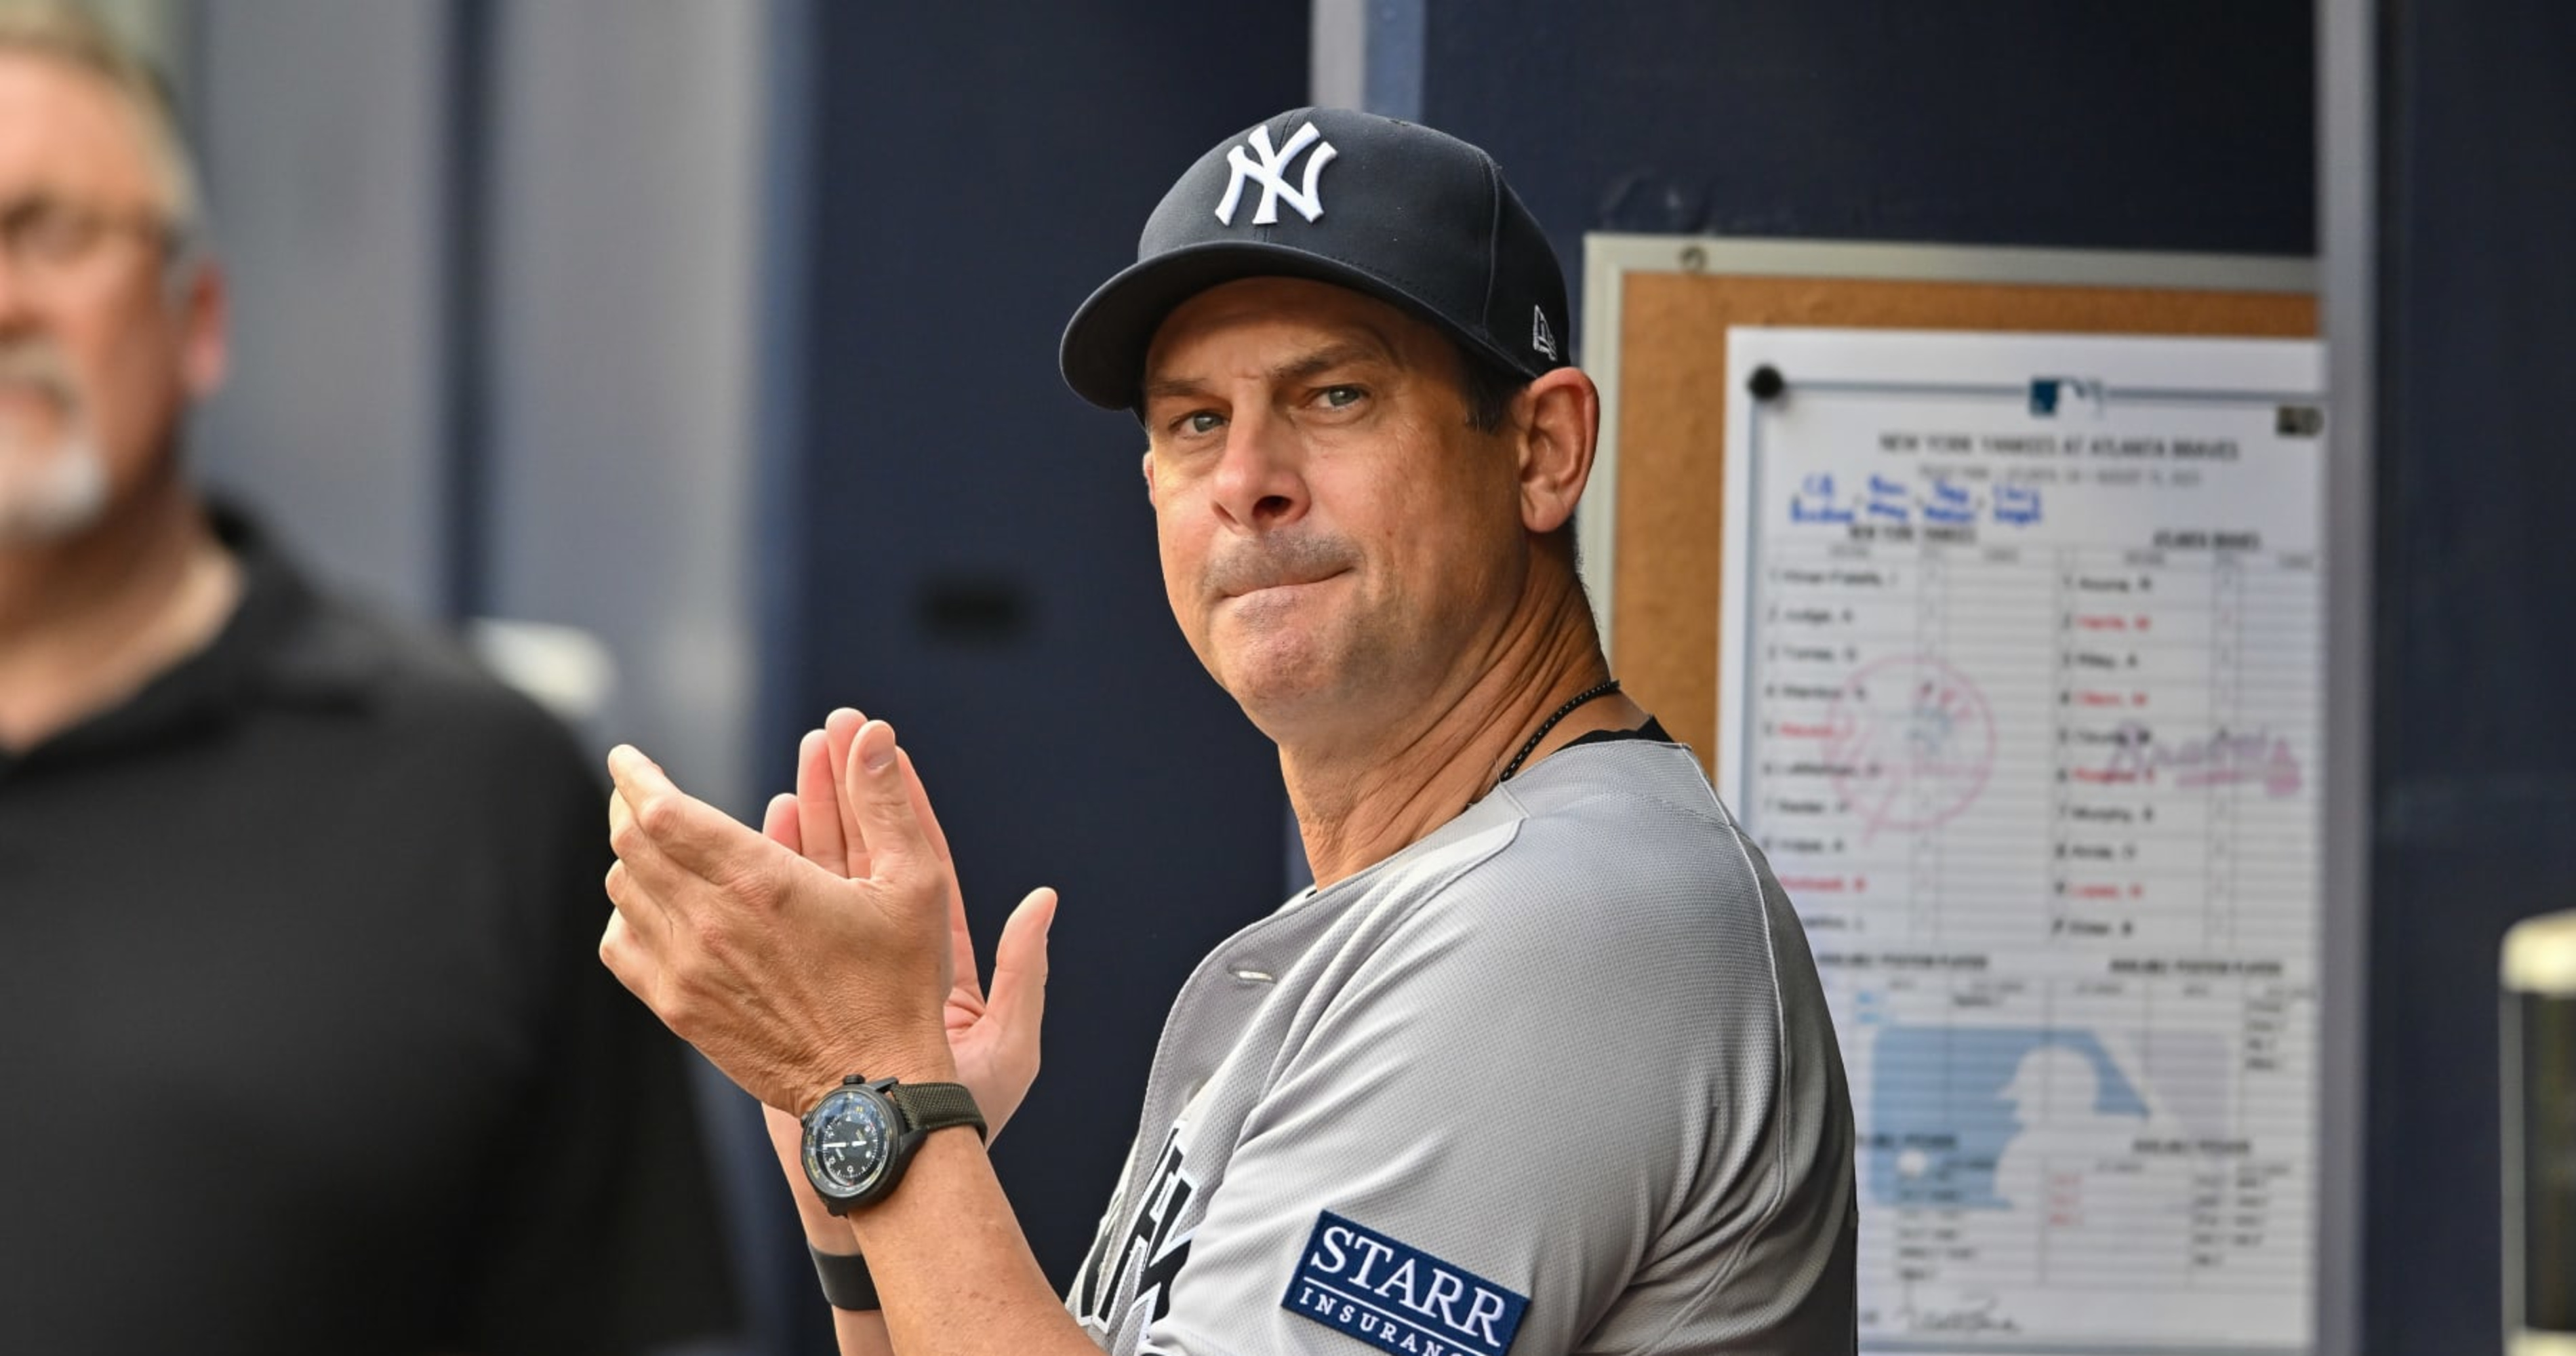 New York Yankees Official Anal Baseball Cap